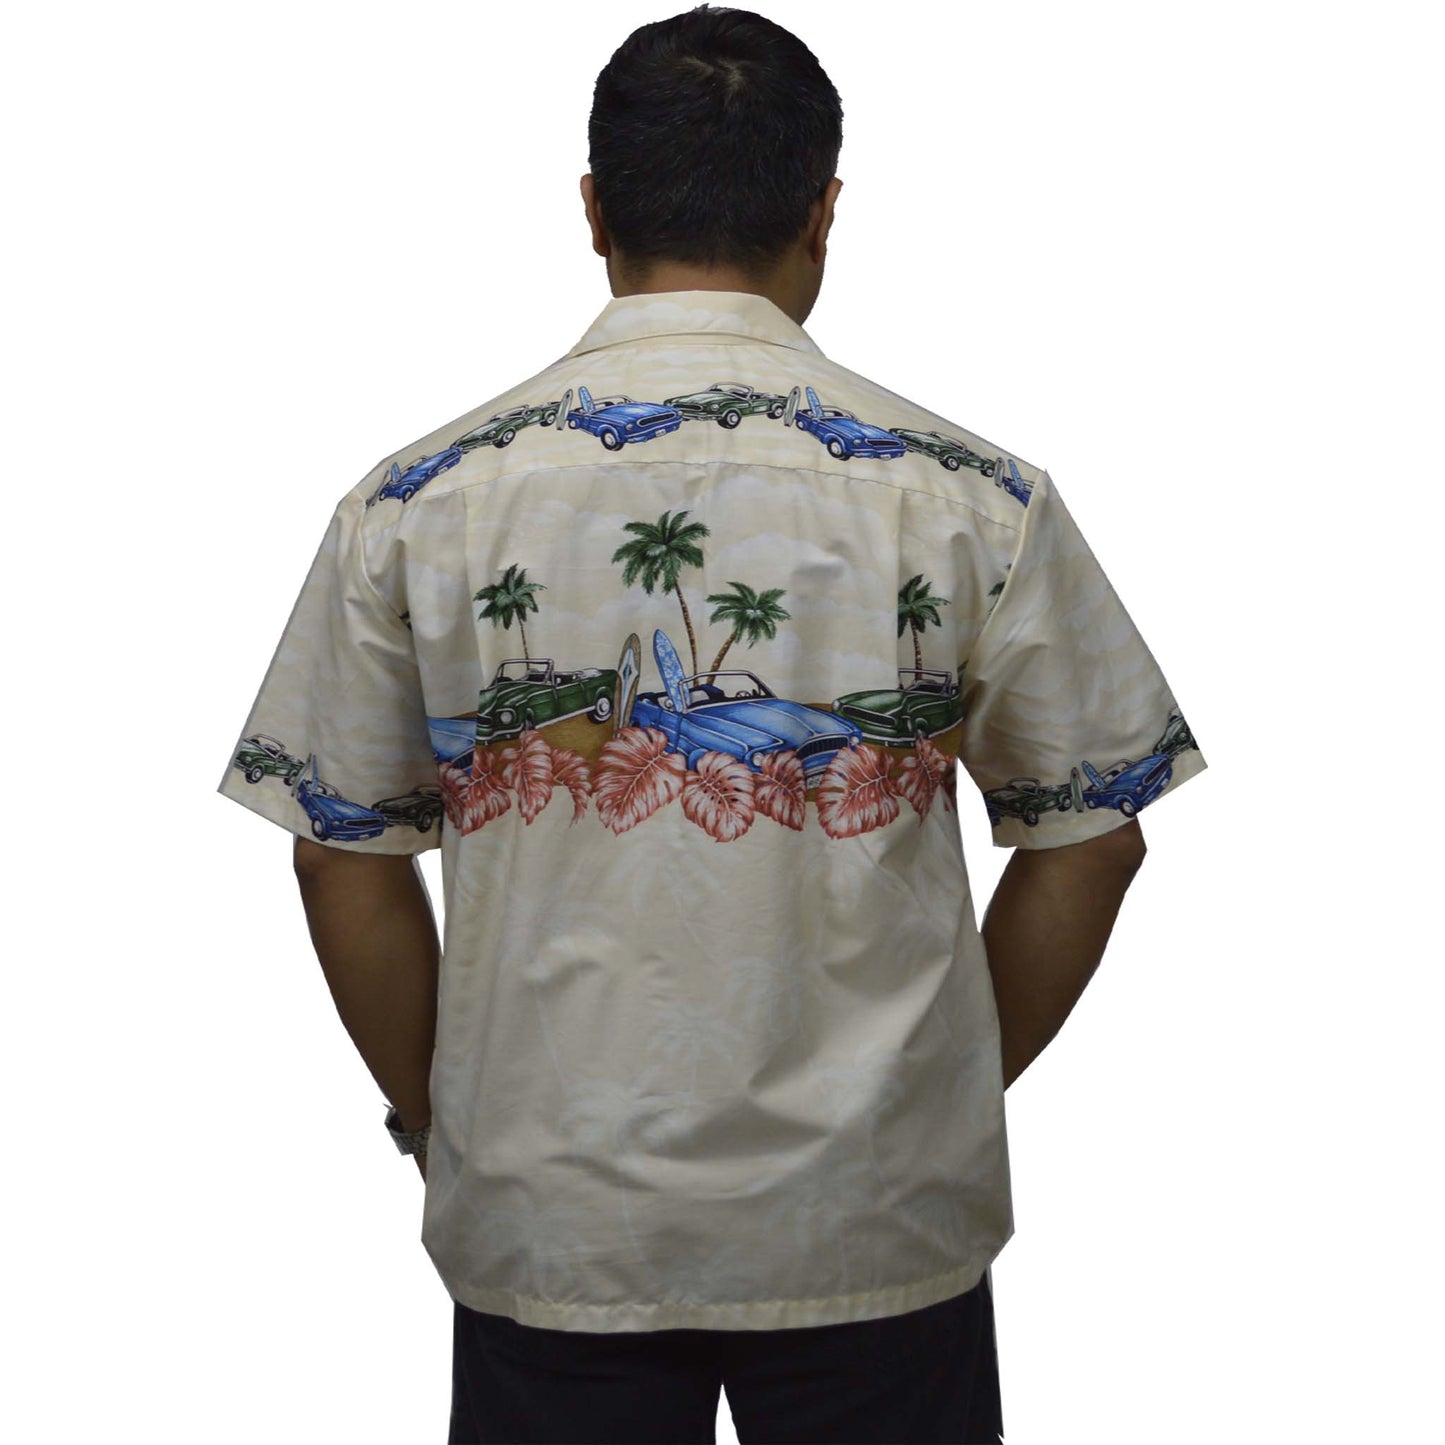 Ky's Cotton Hawaiian Shirt Muscle Car - Cream